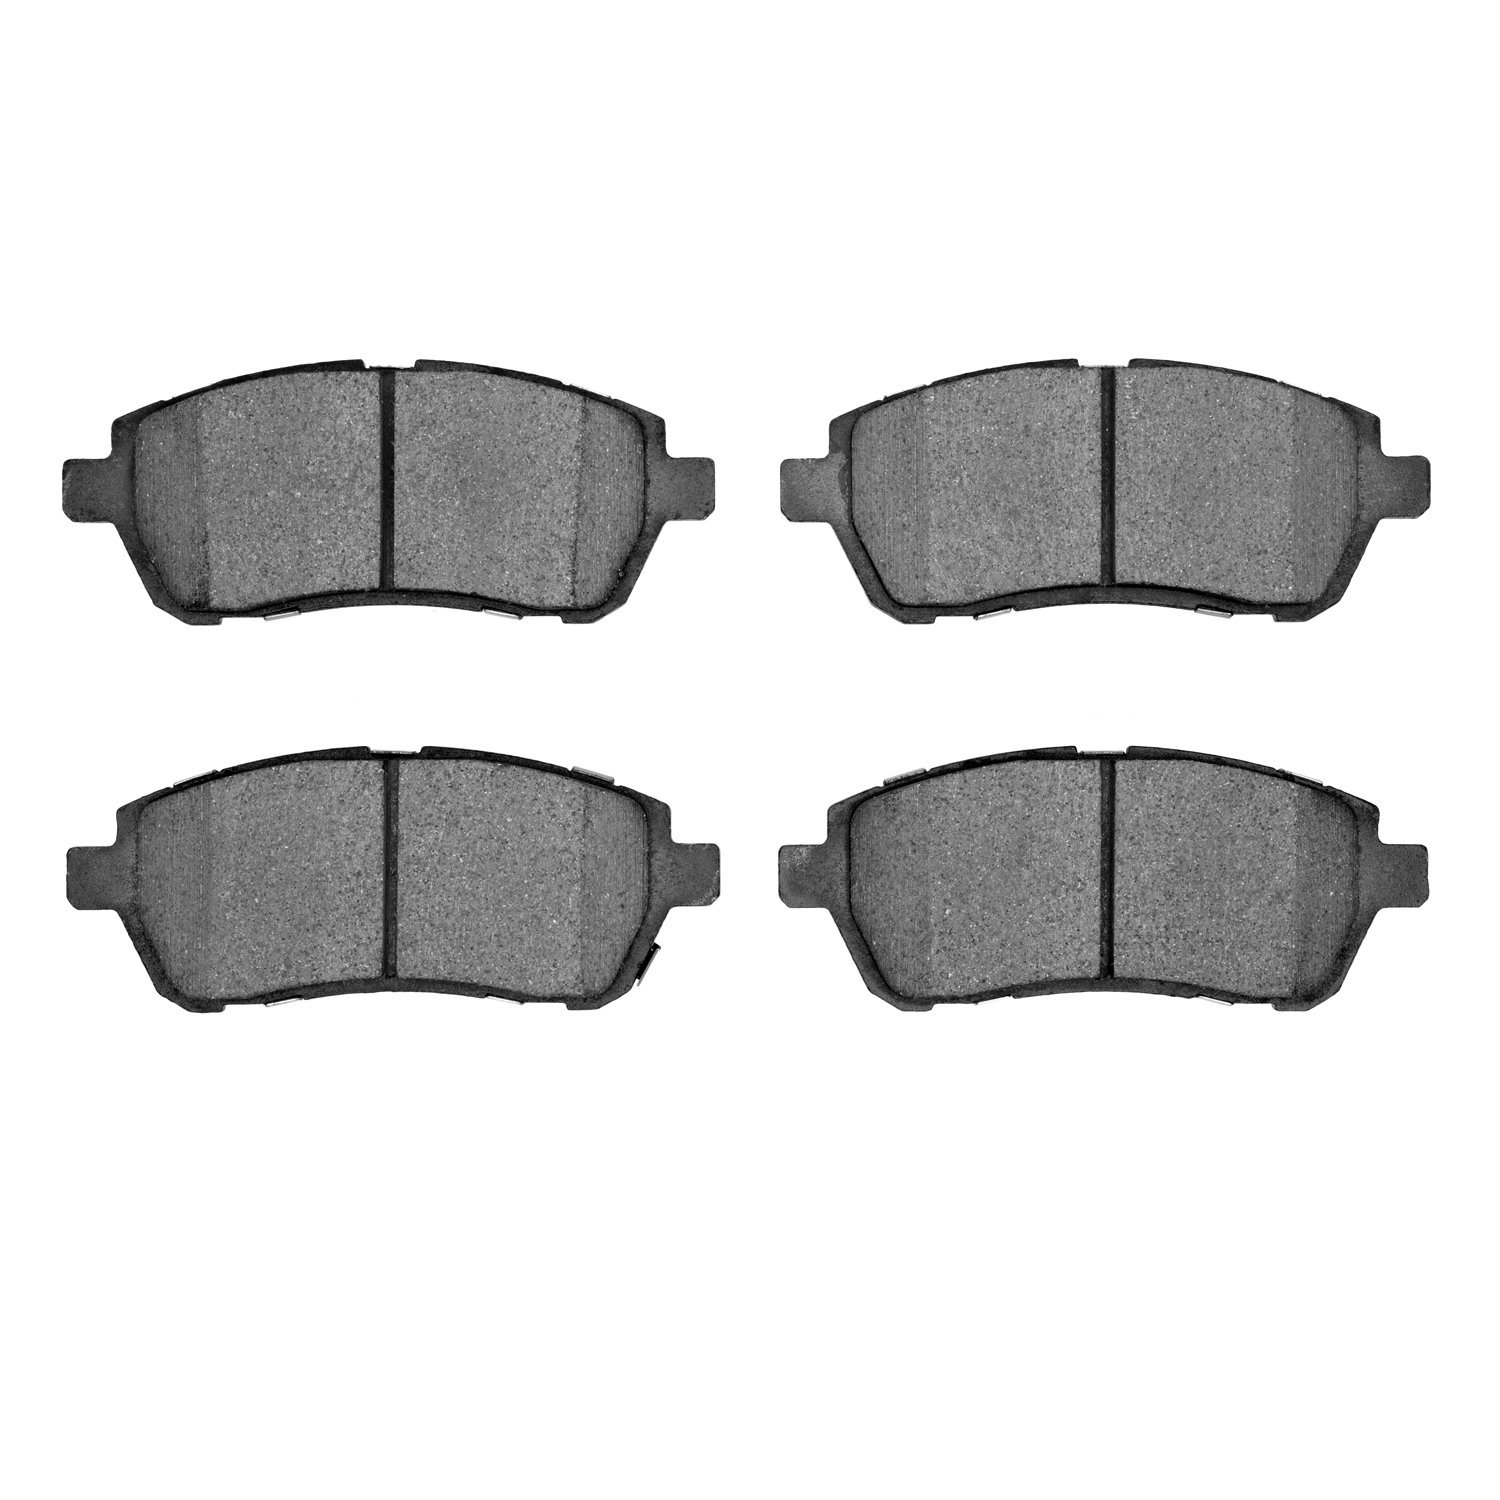 5000 Advanced Ceramic Brake Pads, 2011-2017 Multiple Makes/Models